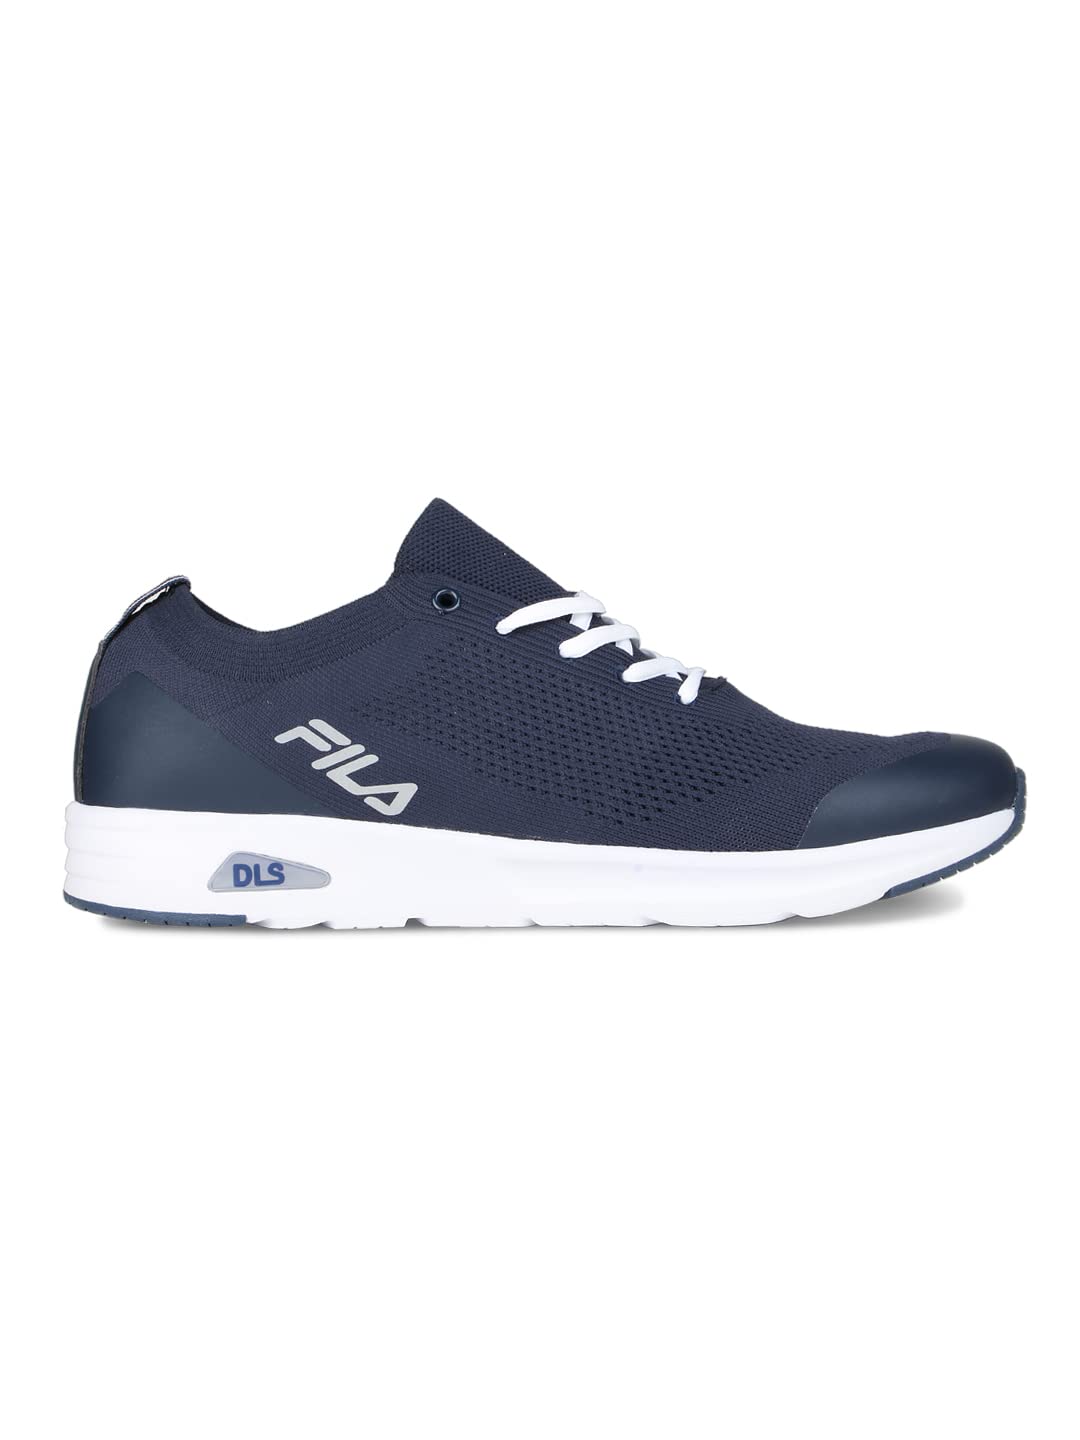 Fila Men's Zubro Pea/Wht Sneakers-11 UK (45 EU) (12 US) (11006881) 